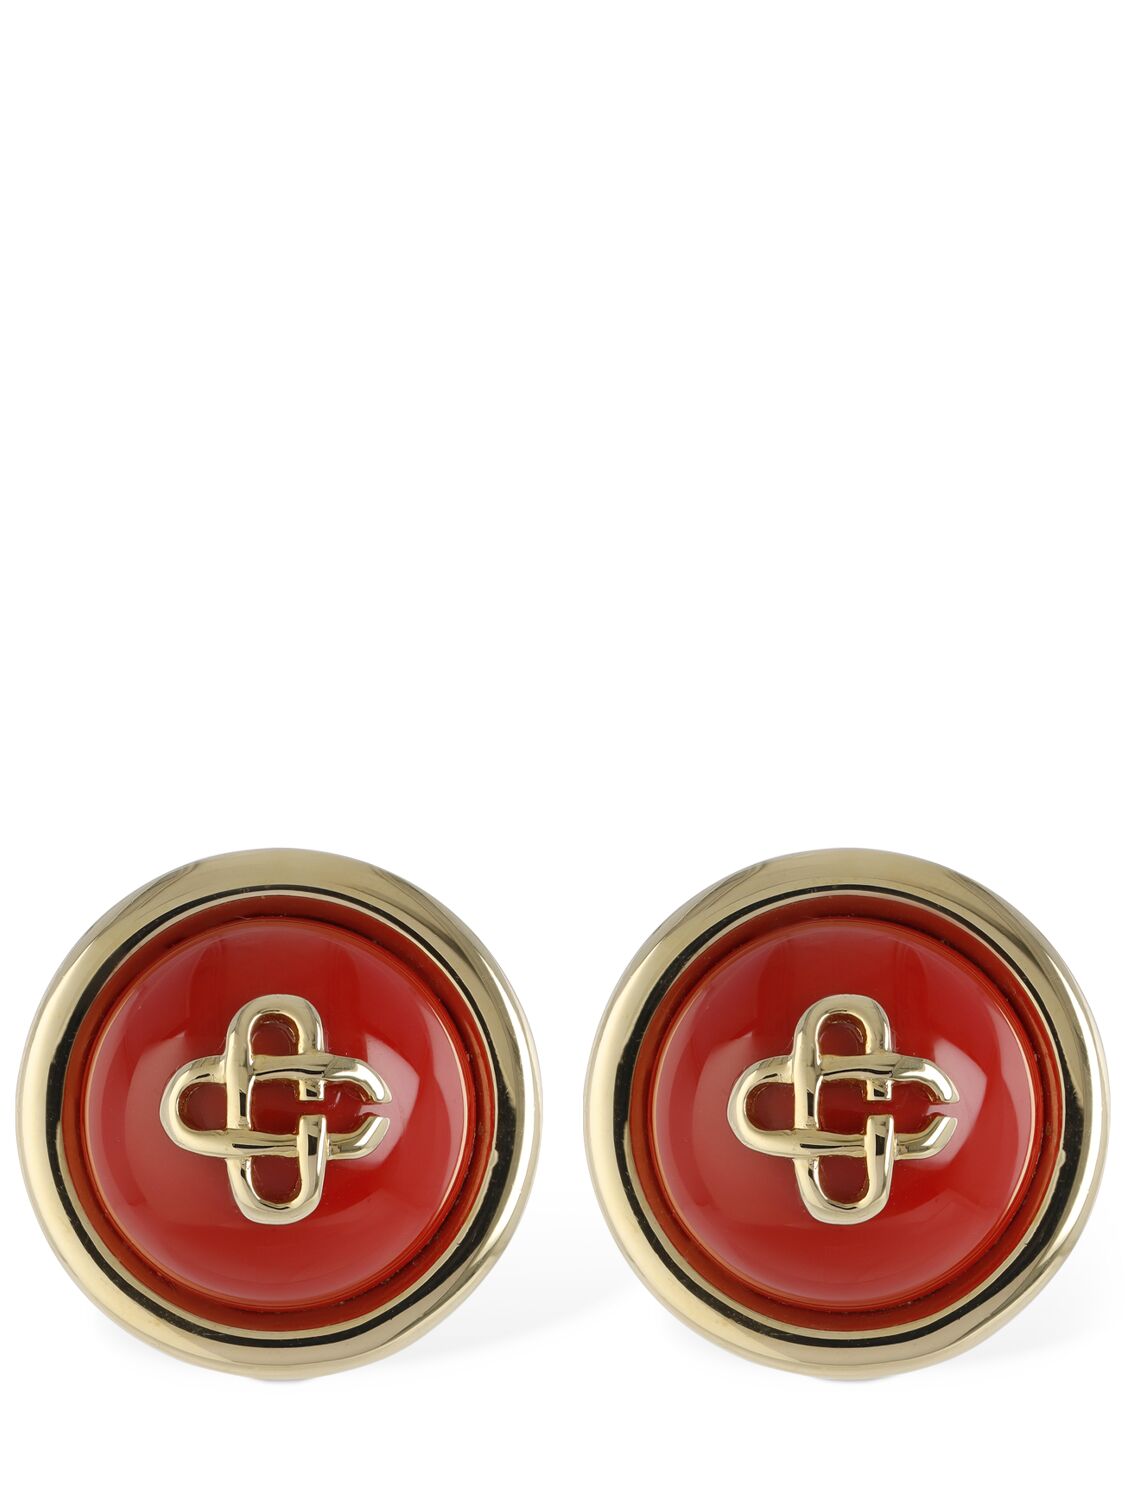 Cc Dome Stud Earrings